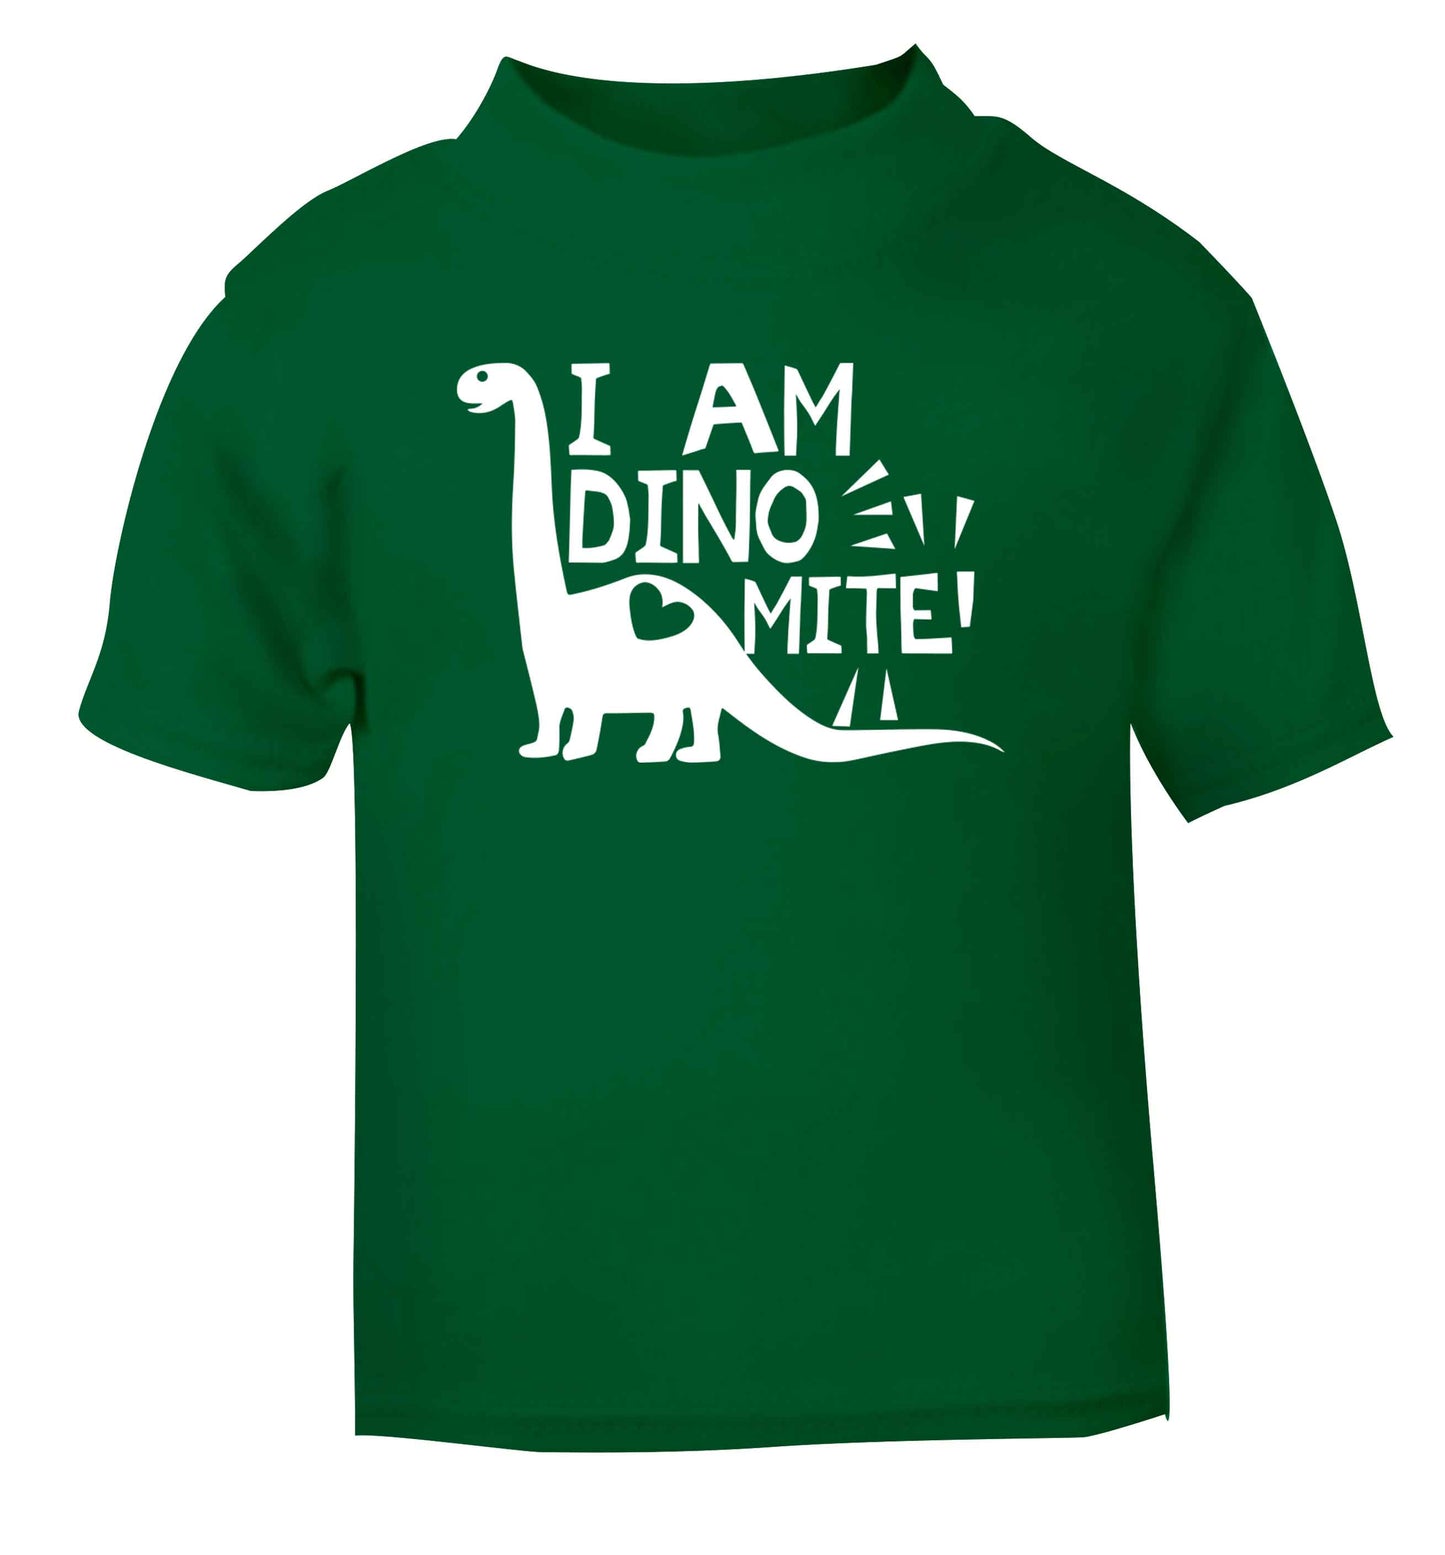 I am dinomite! green Baby Toddler Tshirt 2 Years